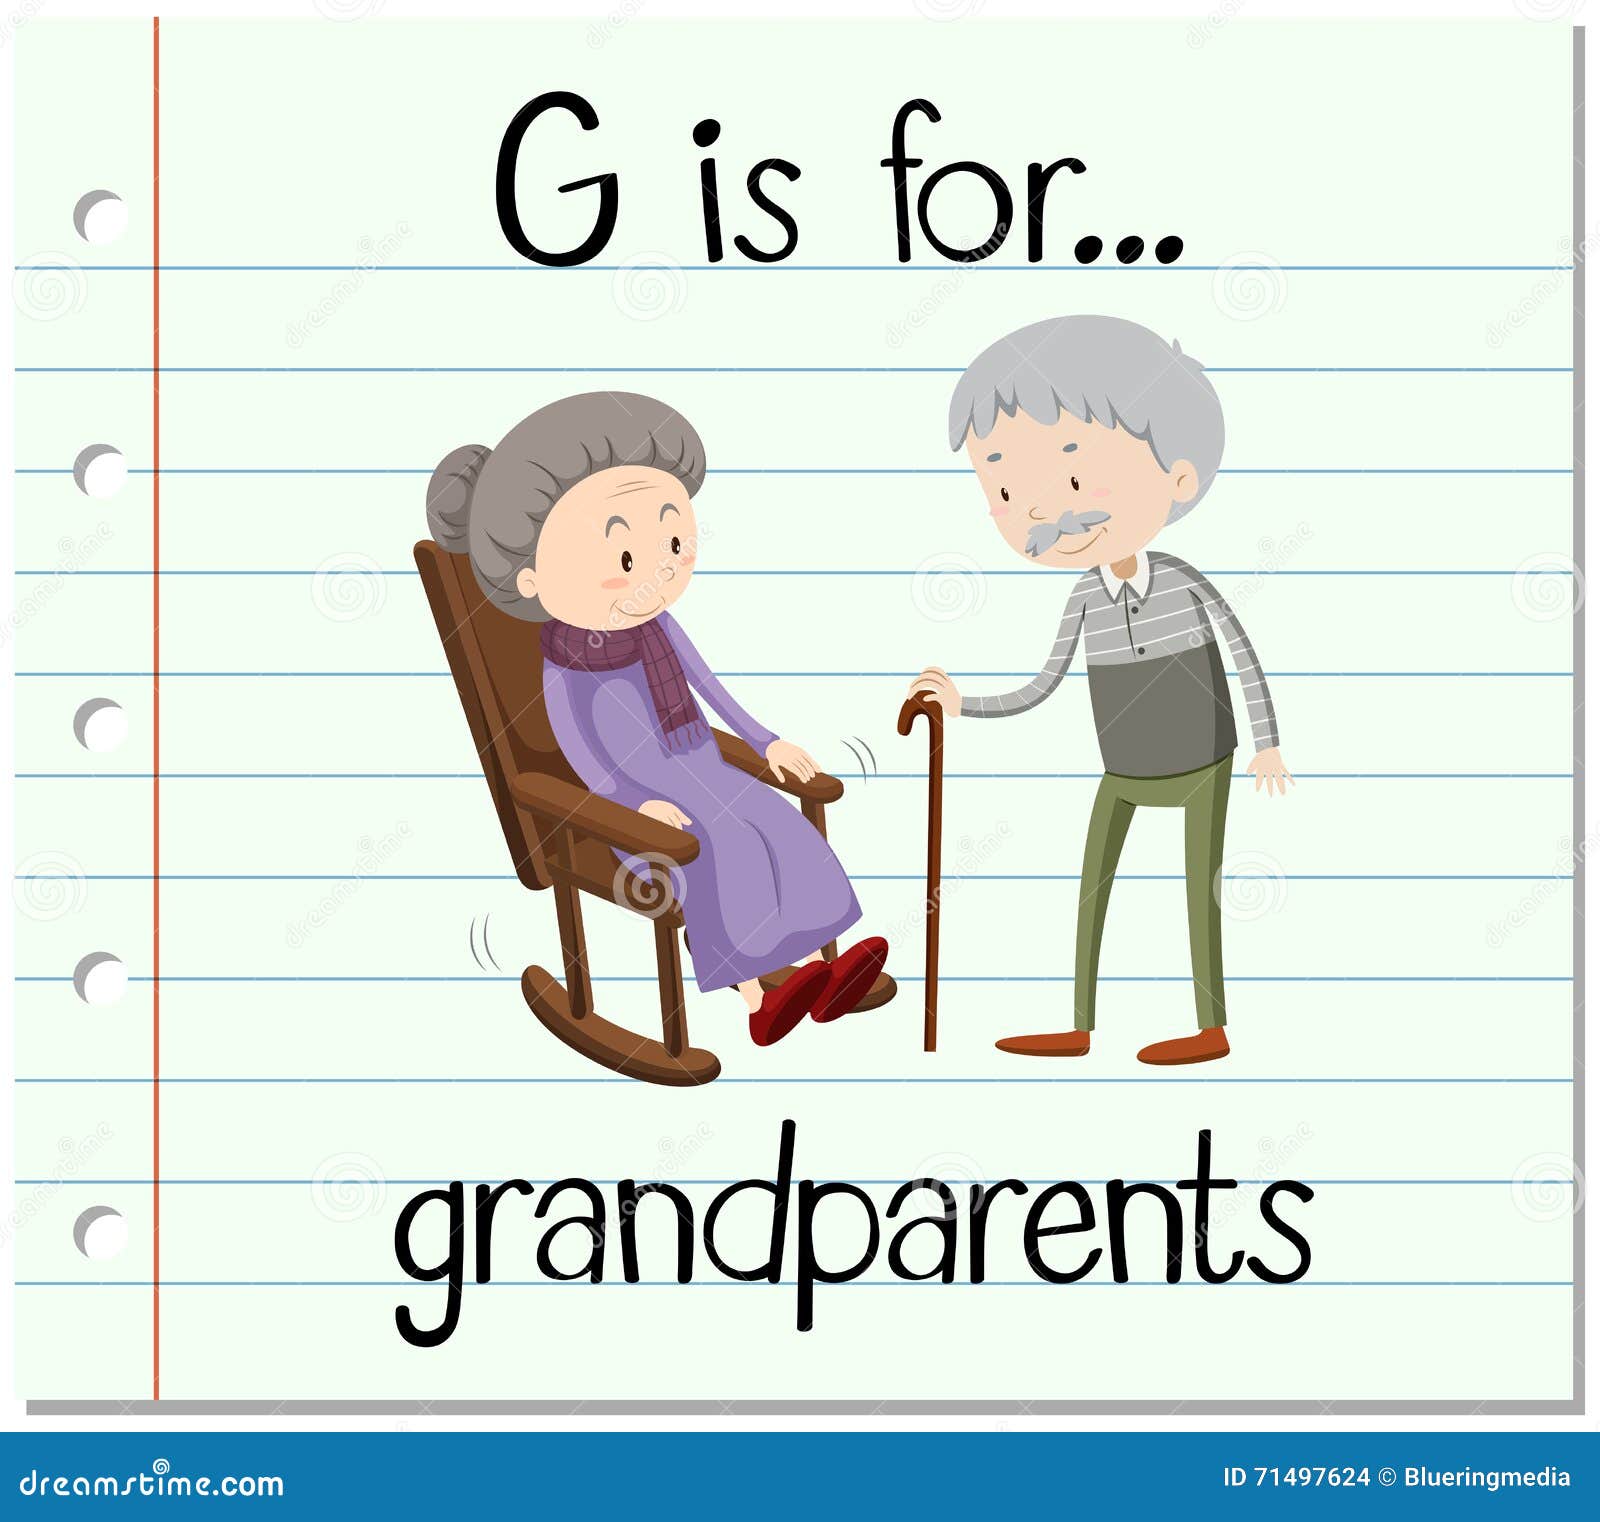 Do your grandparents. Grandparents Flashcard. Grandpa Flashcard. Grandparents перевод. Visit grandparents Flashcard.